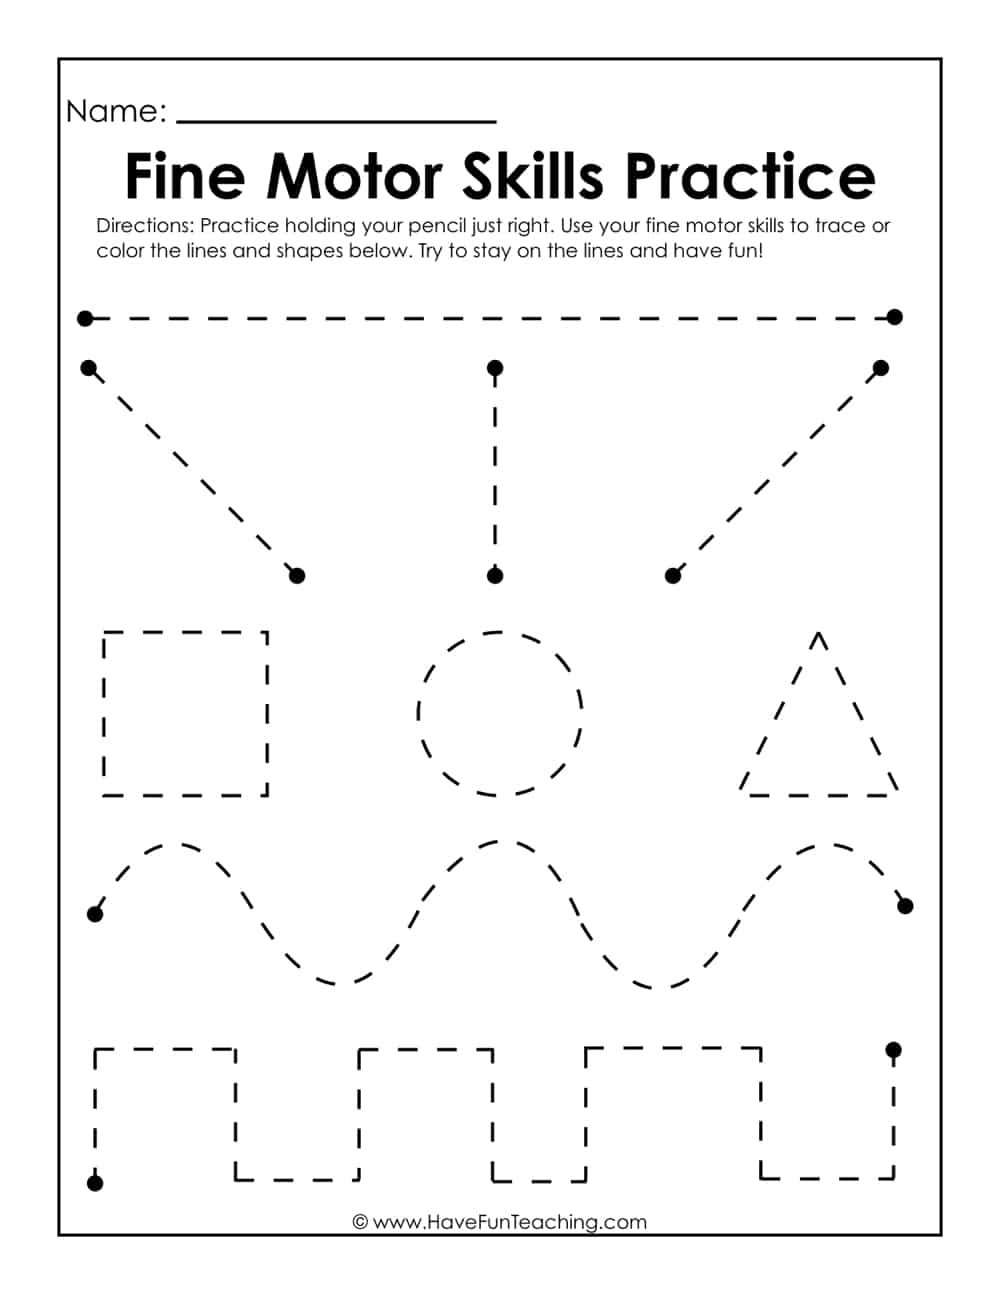 Fine Motor Skills Practice Worksheet  Have Fun Teaching